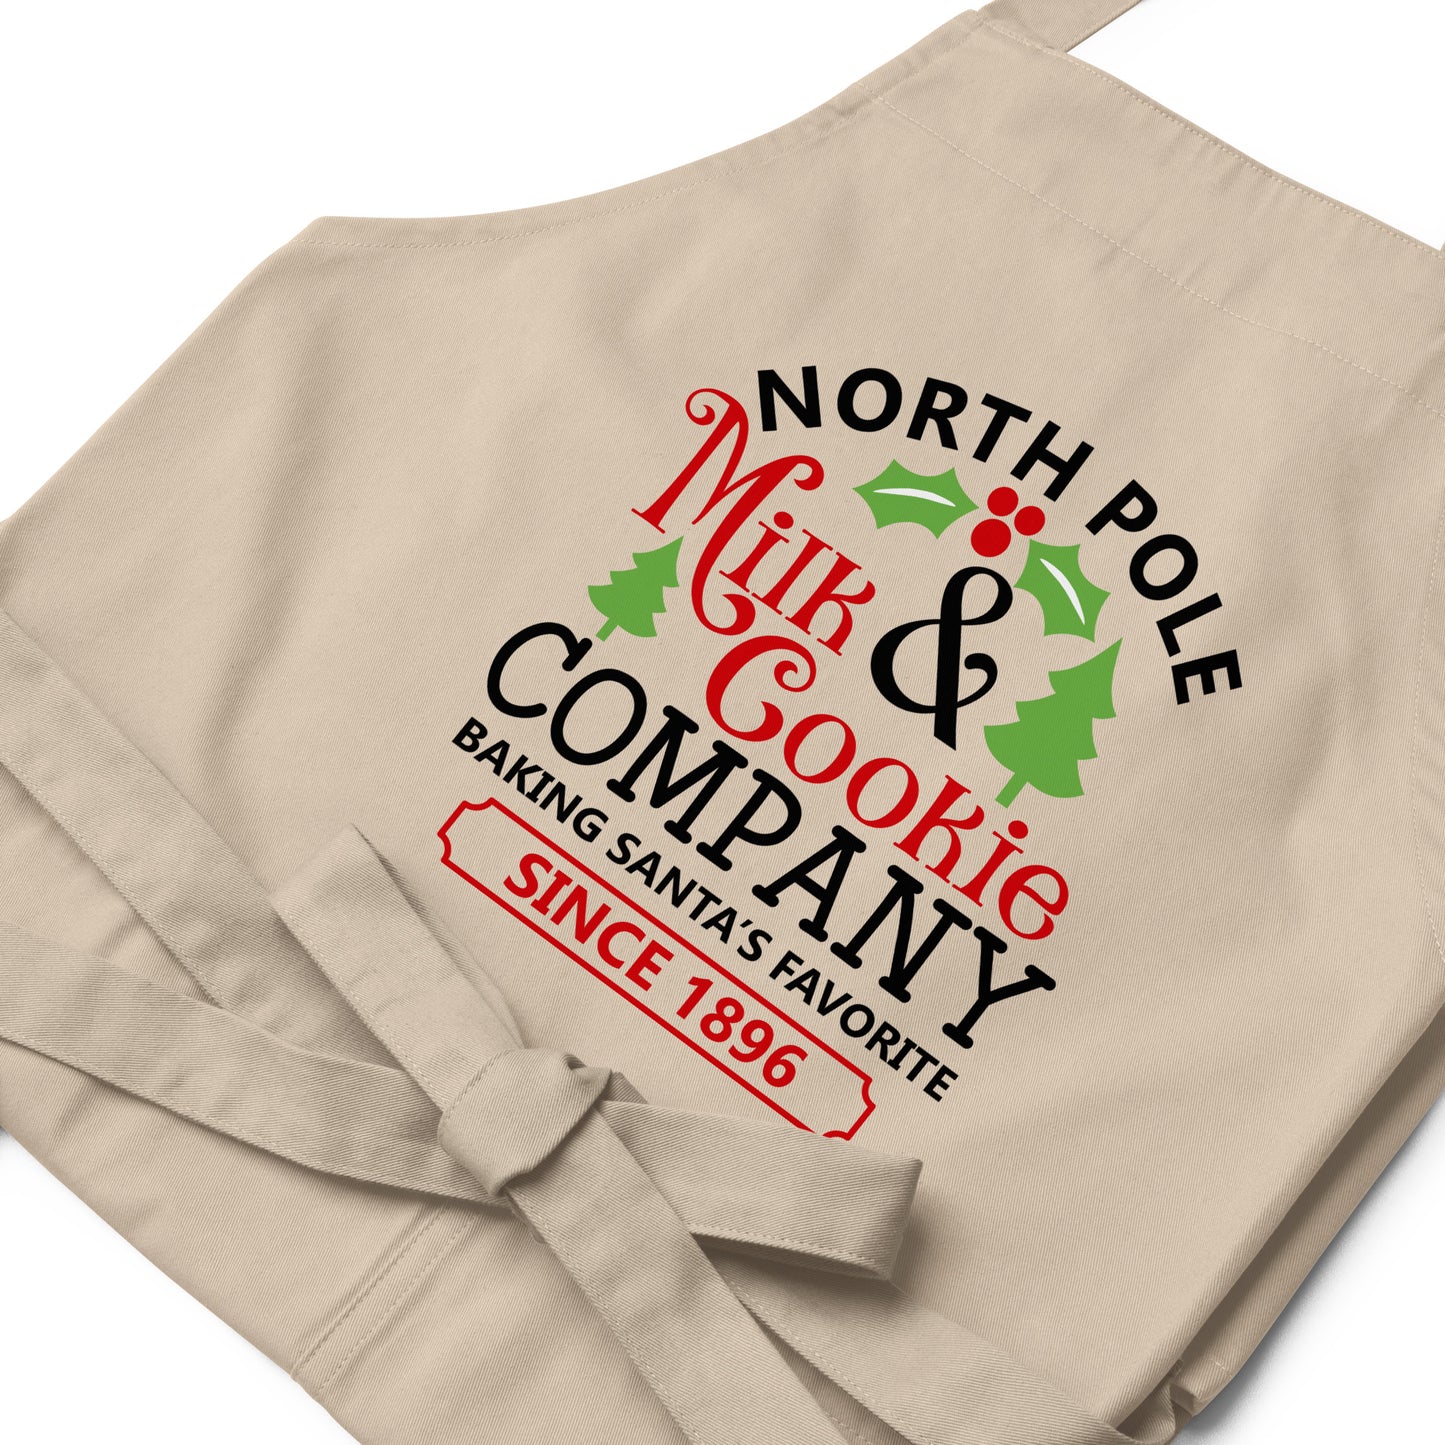 North Pole Milk & Cookie Co. - Printed - Organic Cotton Apron